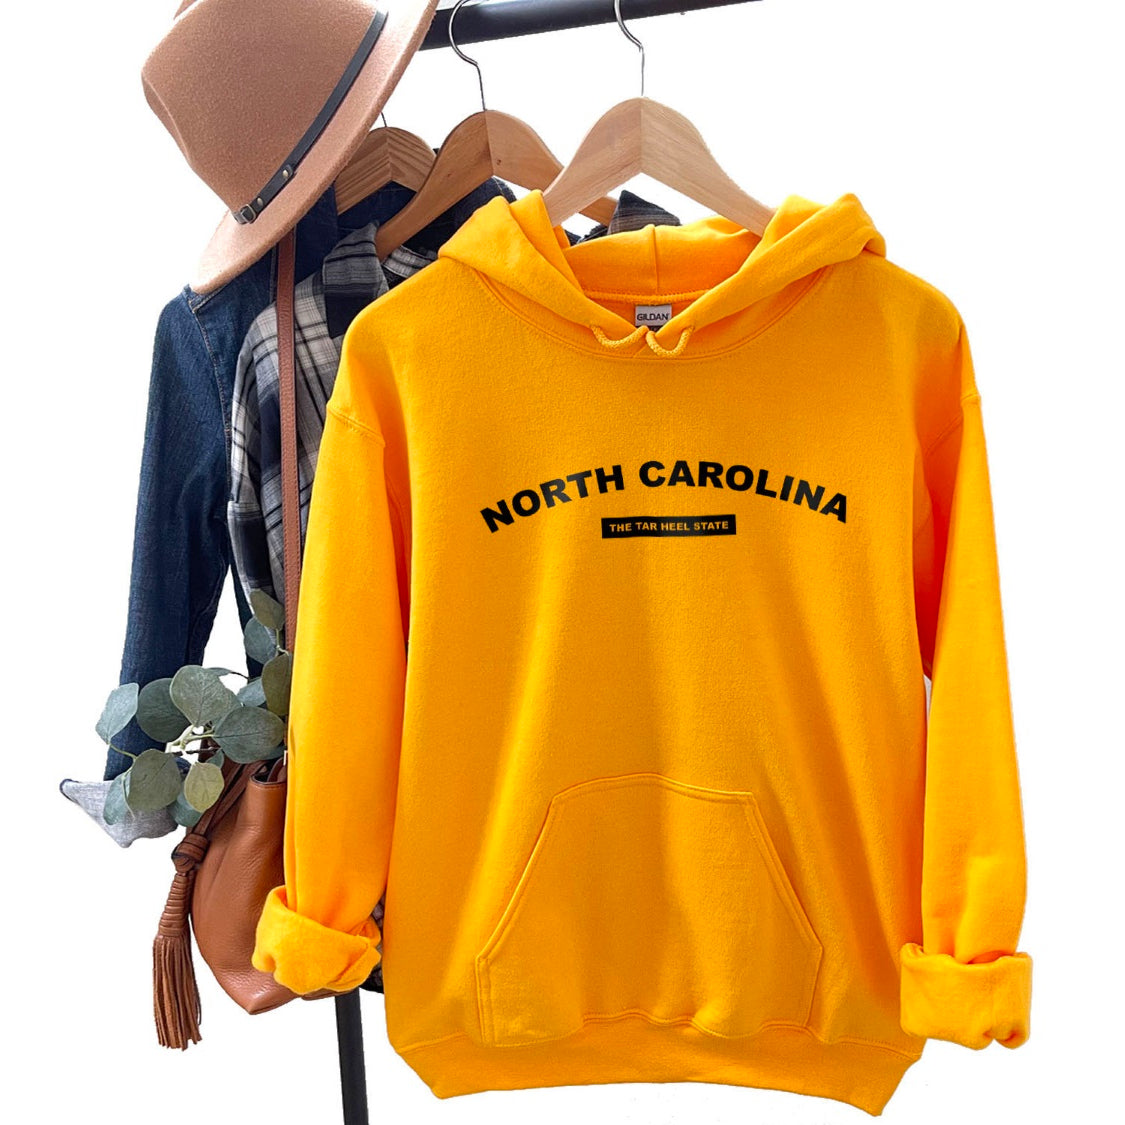 North Carolina The Tar Heel State Hoodie - United States Name & Slogan Minimal Design Printed Hoodie